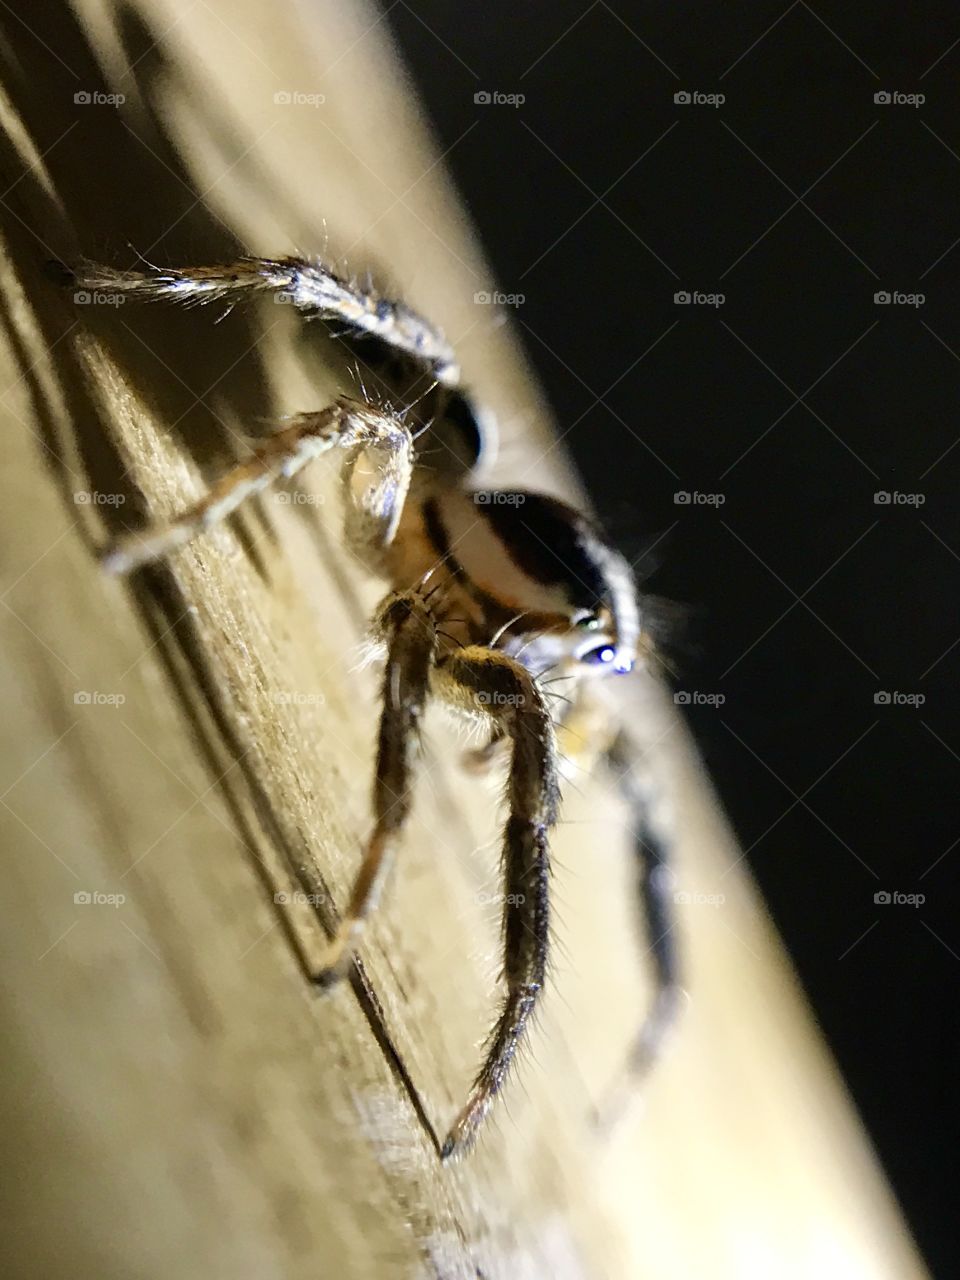 Spider on wood